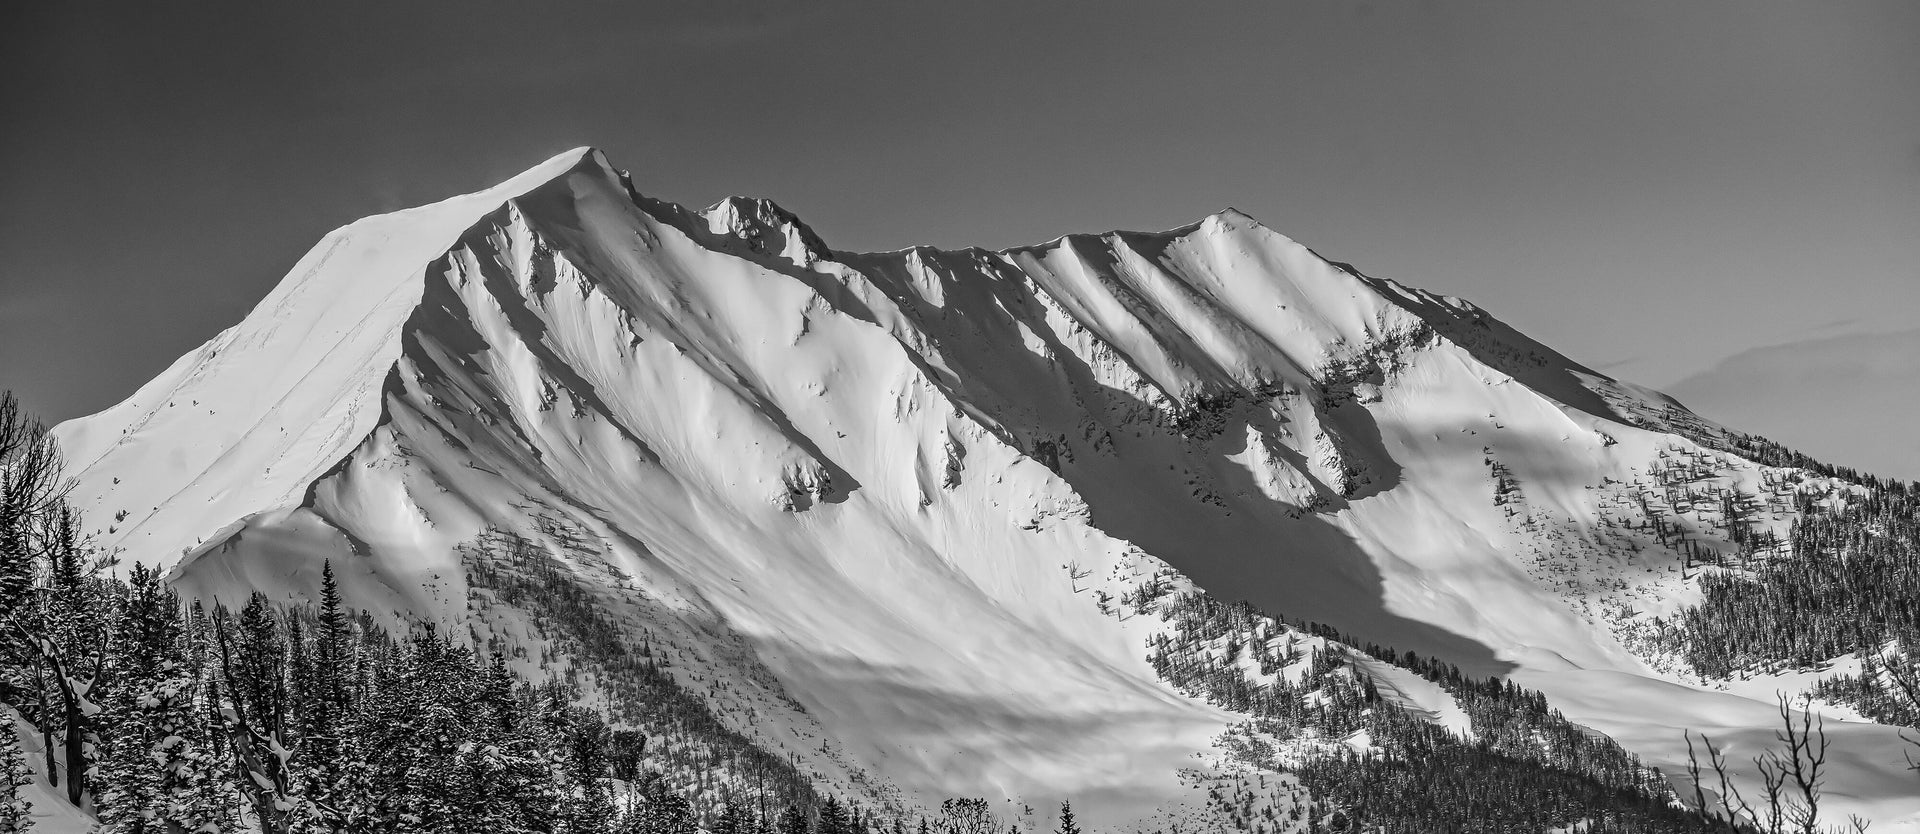 Black and white image of Madison Range in Montana